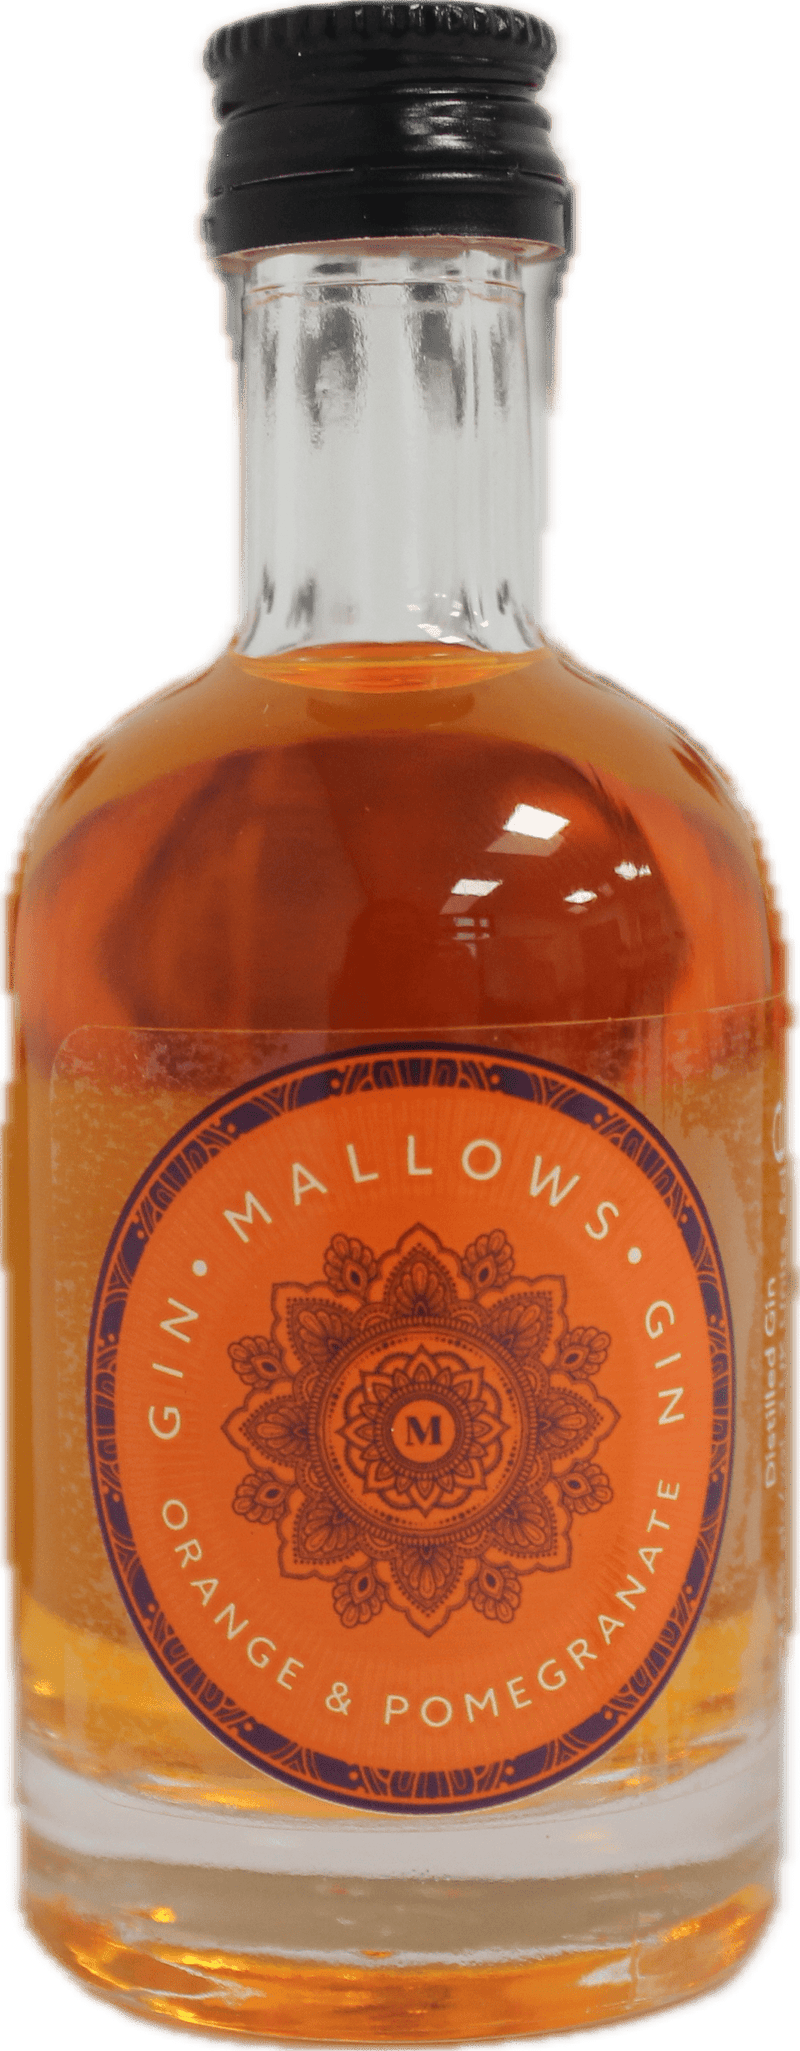 Mallows Orange & Pomegranate Gin Miniature 5cl